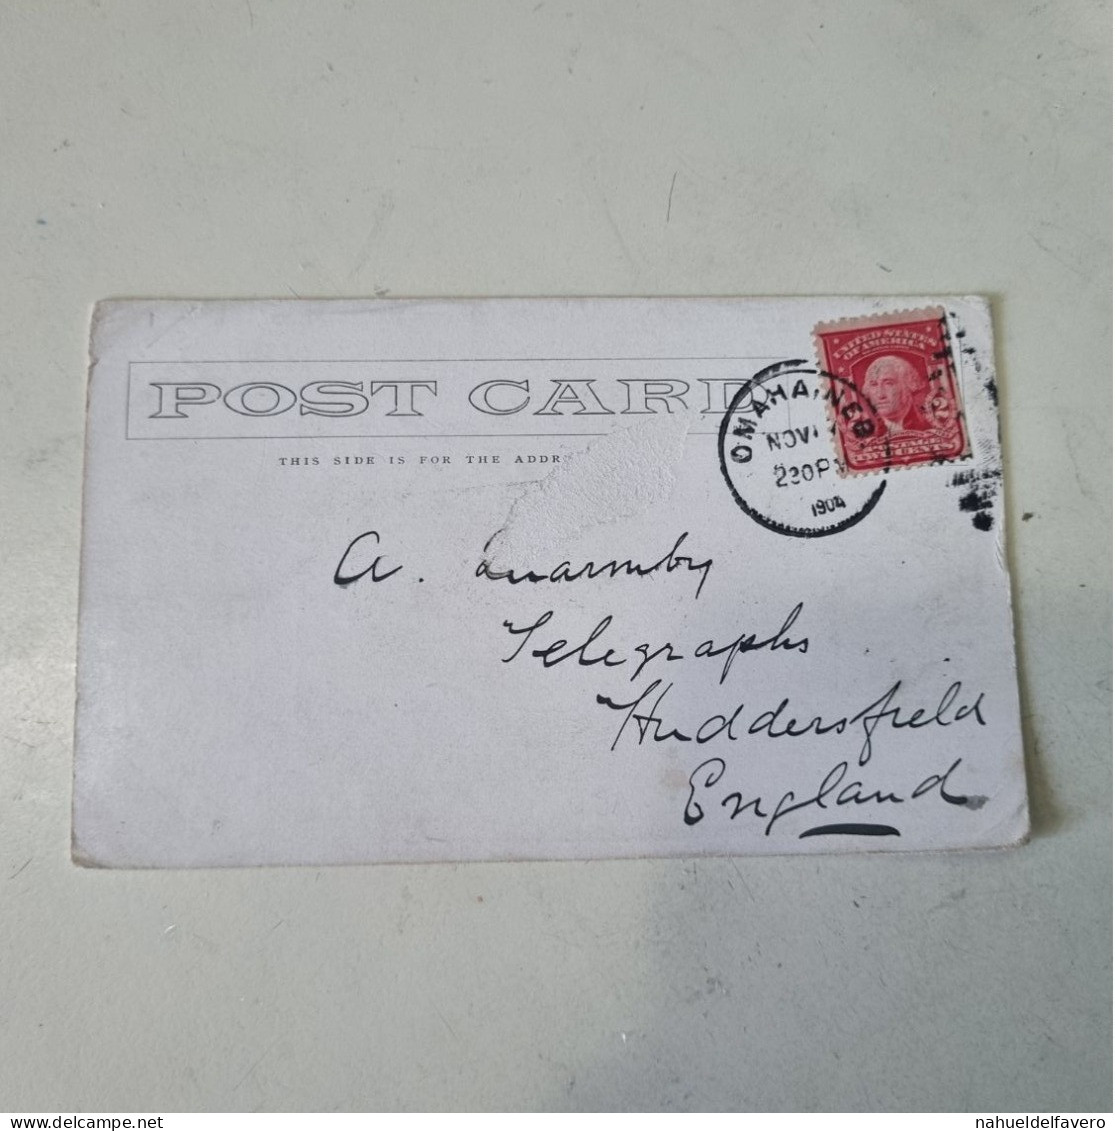 Circulated Postcard 1904 - U.S.A. - NORTH THIRTY-NINE STREET, OMAHA, NEBRASKA - Omaha